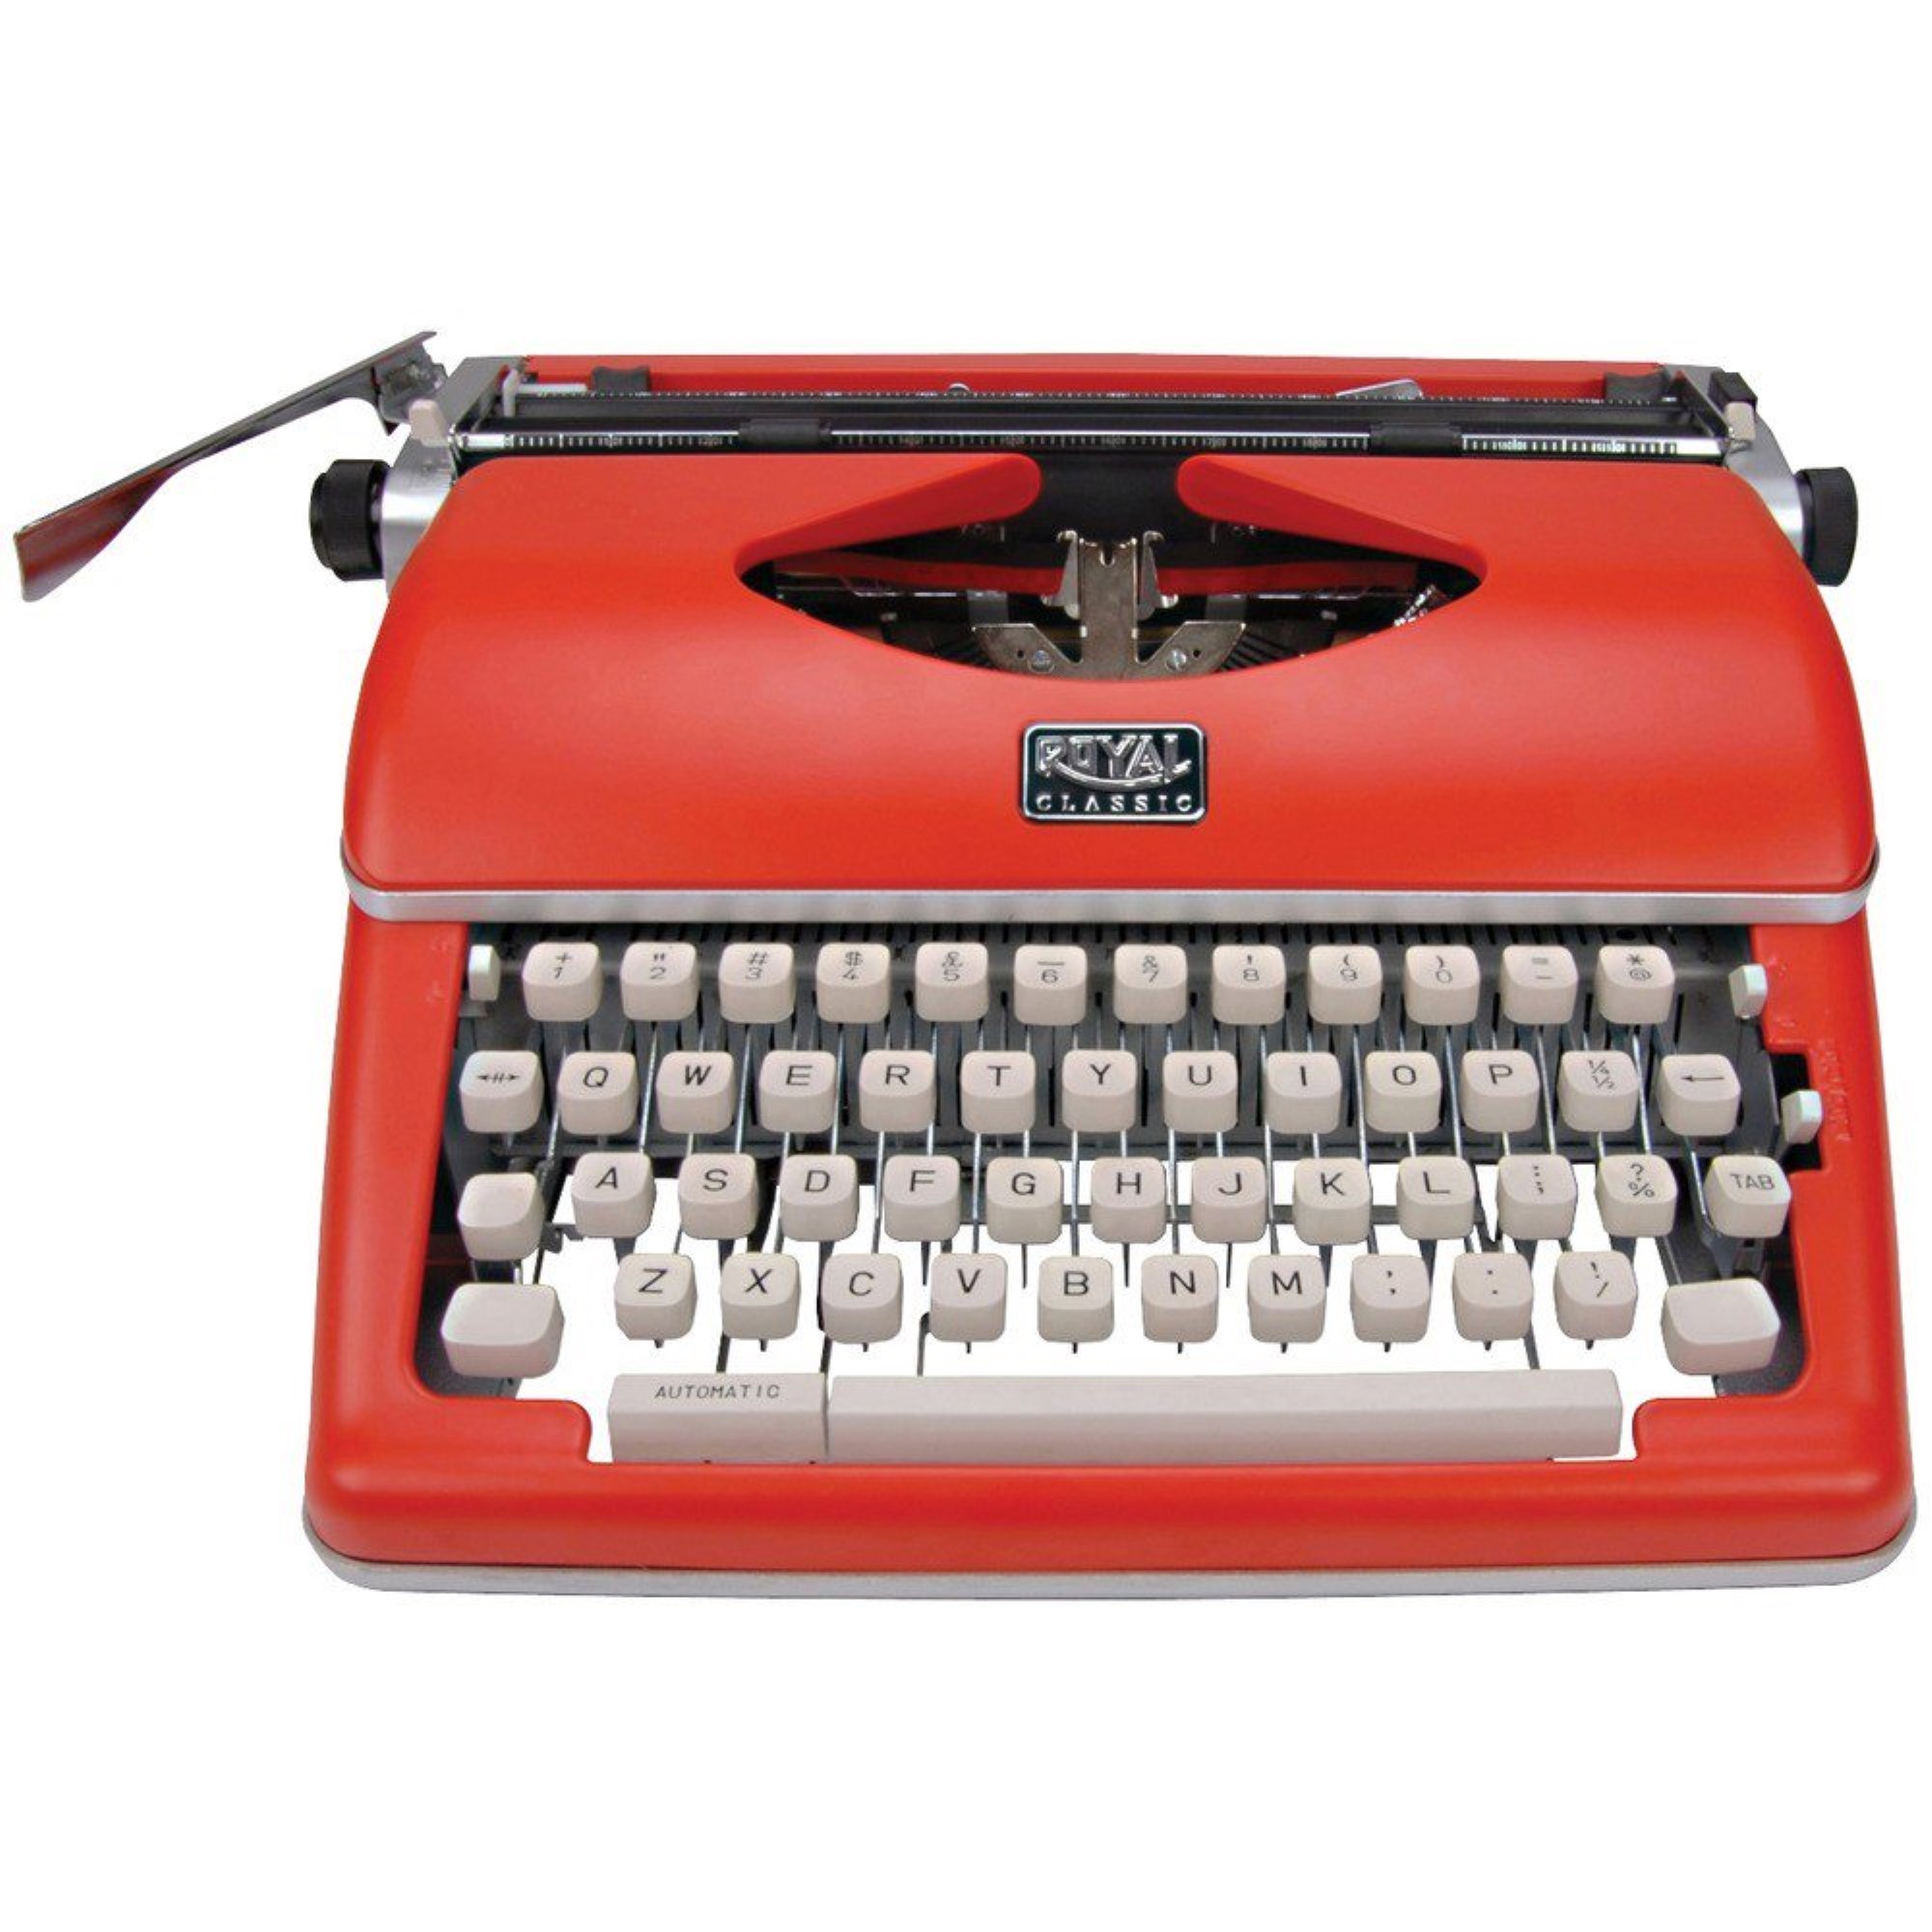 Picture Of A Typewriter - KibrisPDR